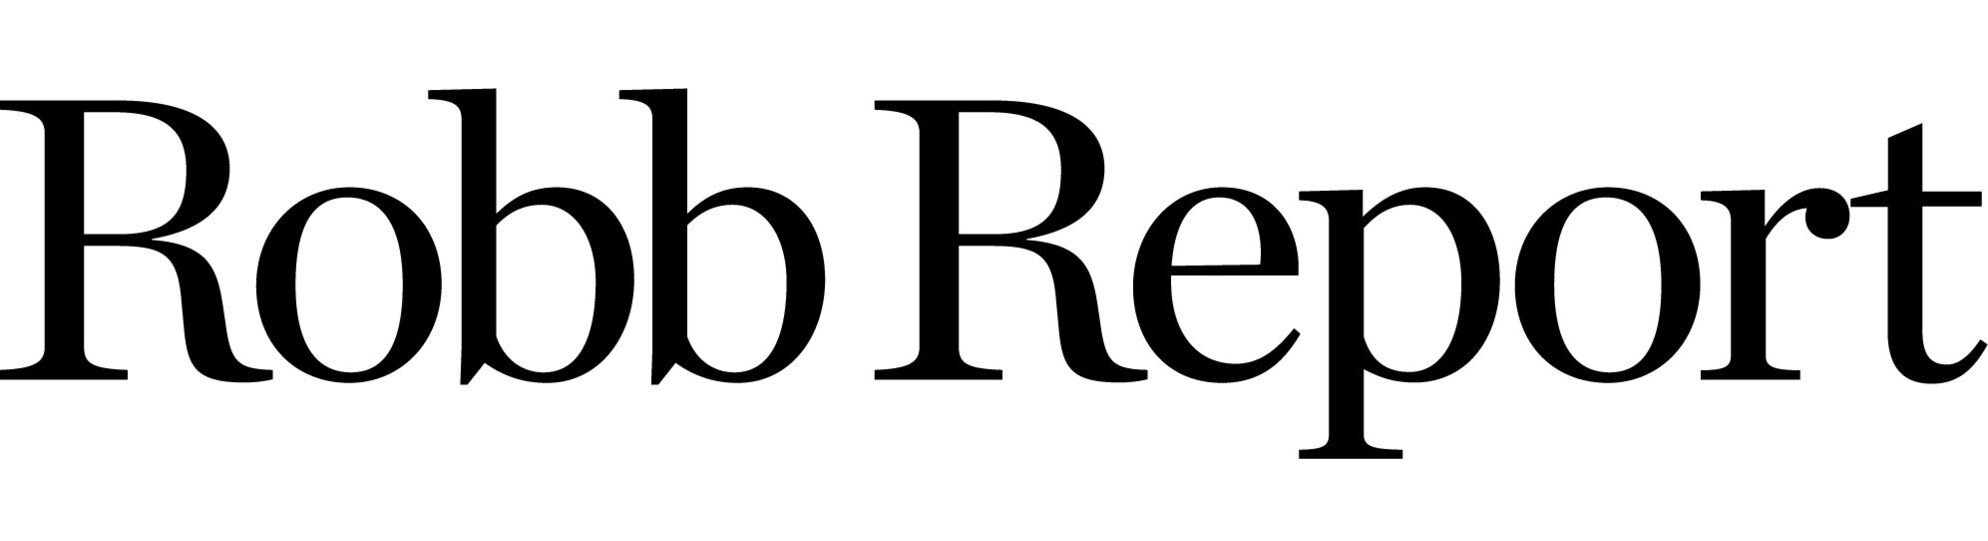 Robb-Report-logo